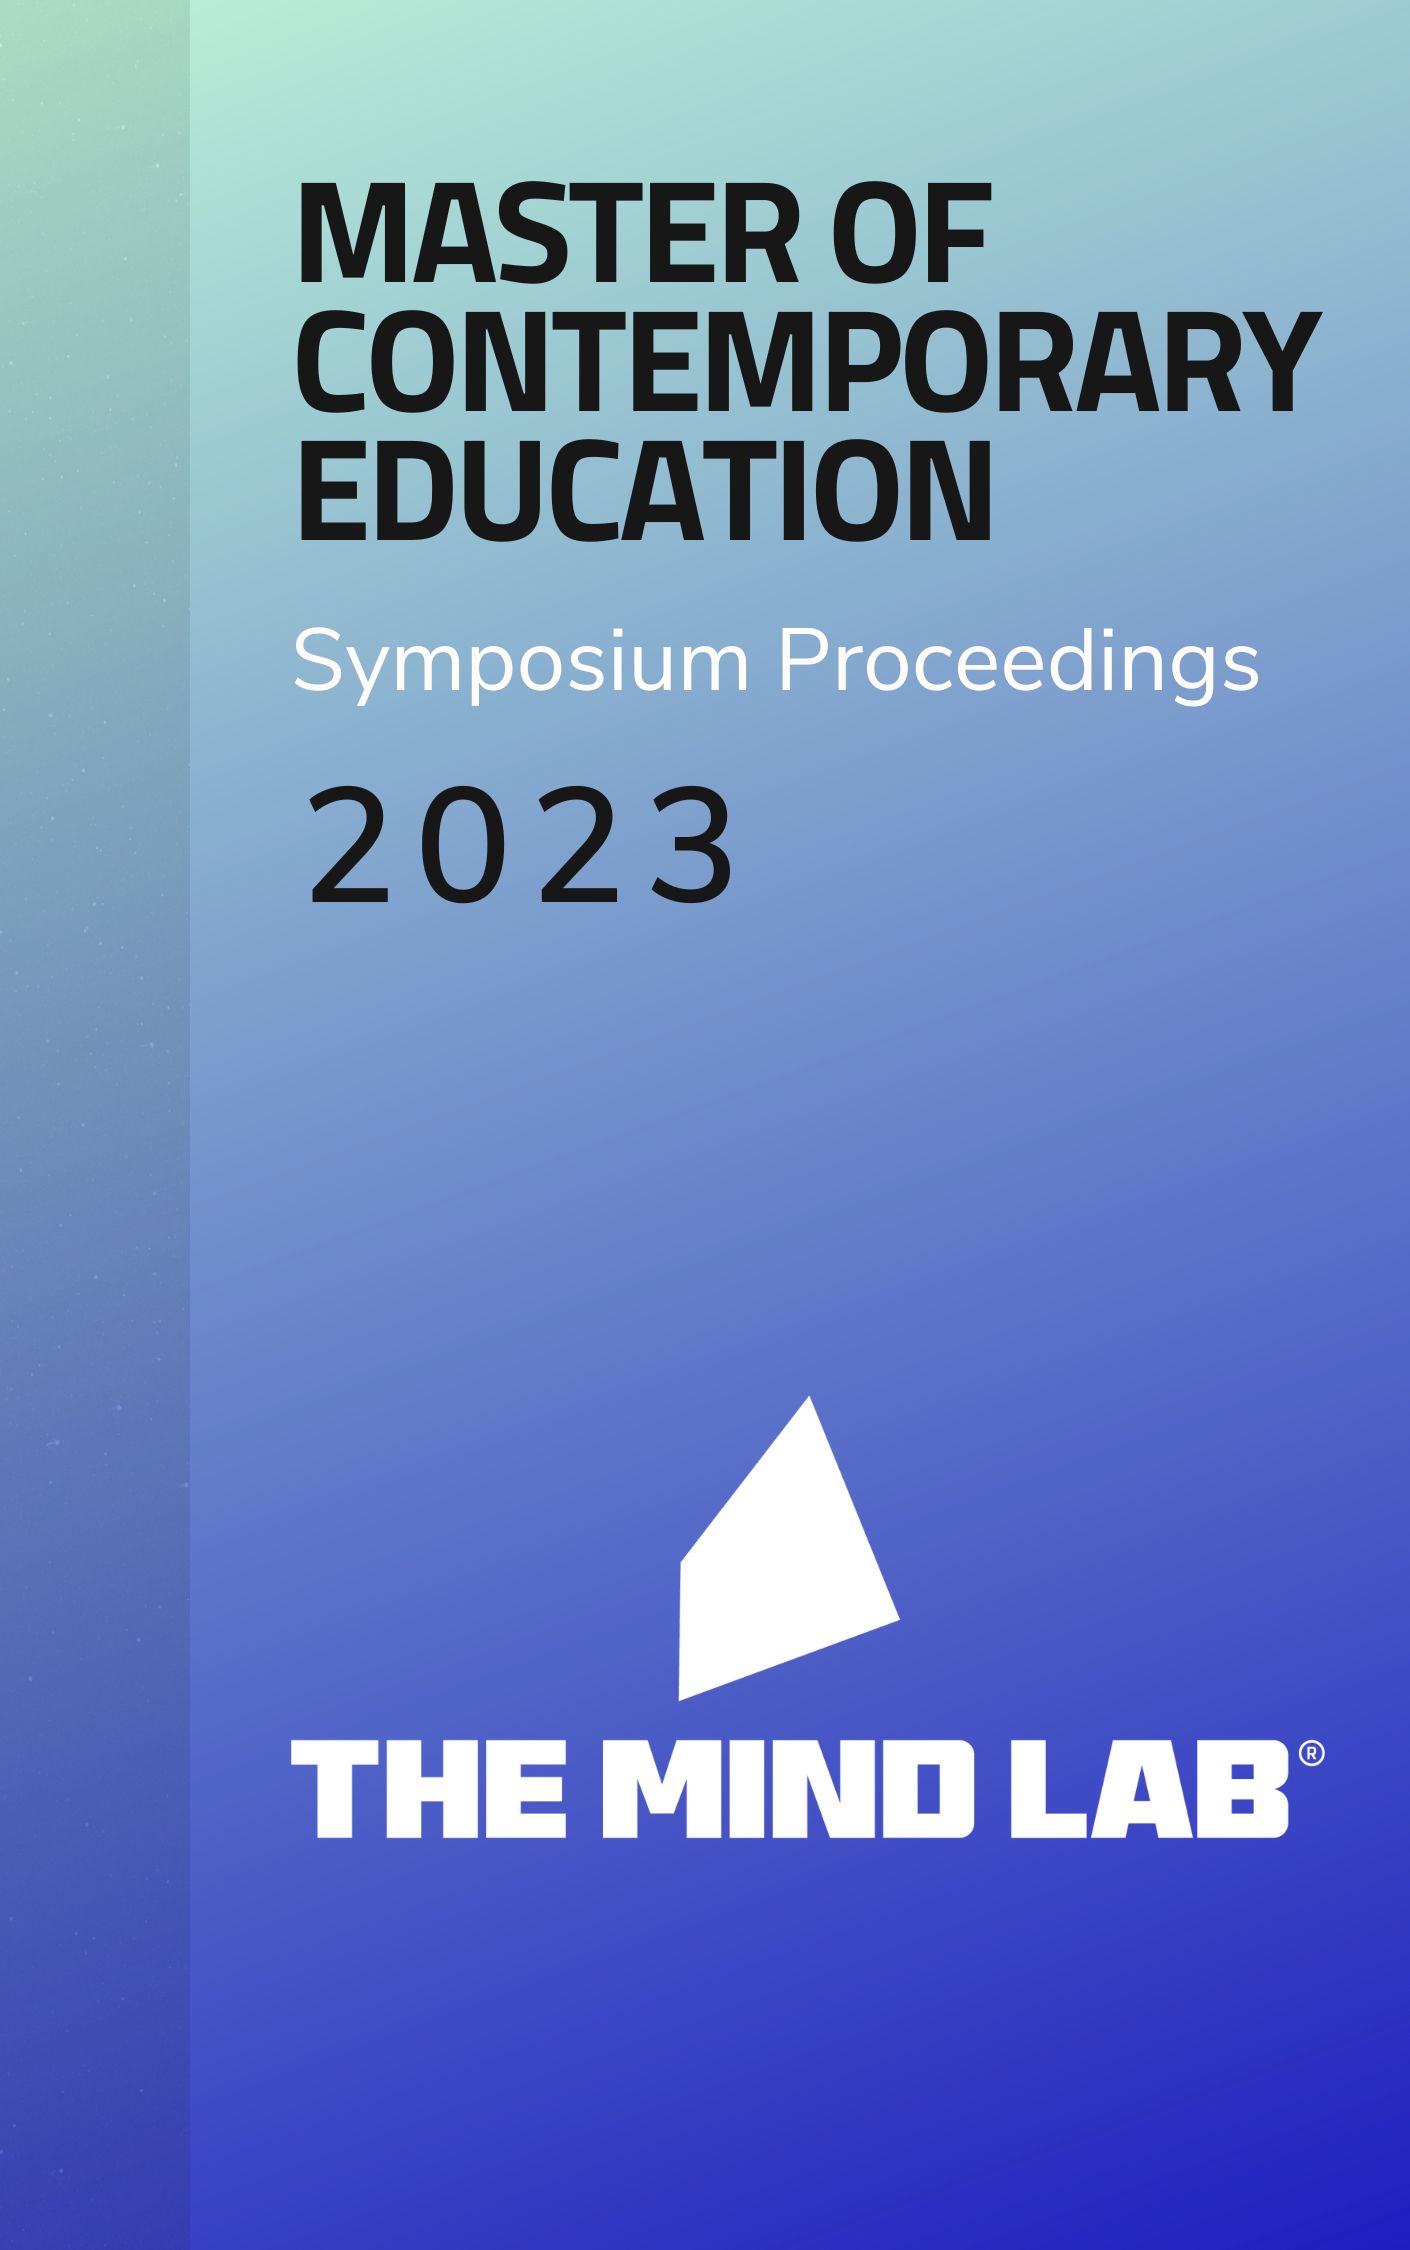 					View 2023: Master of Contemporary Education Symposium Proceedings
				